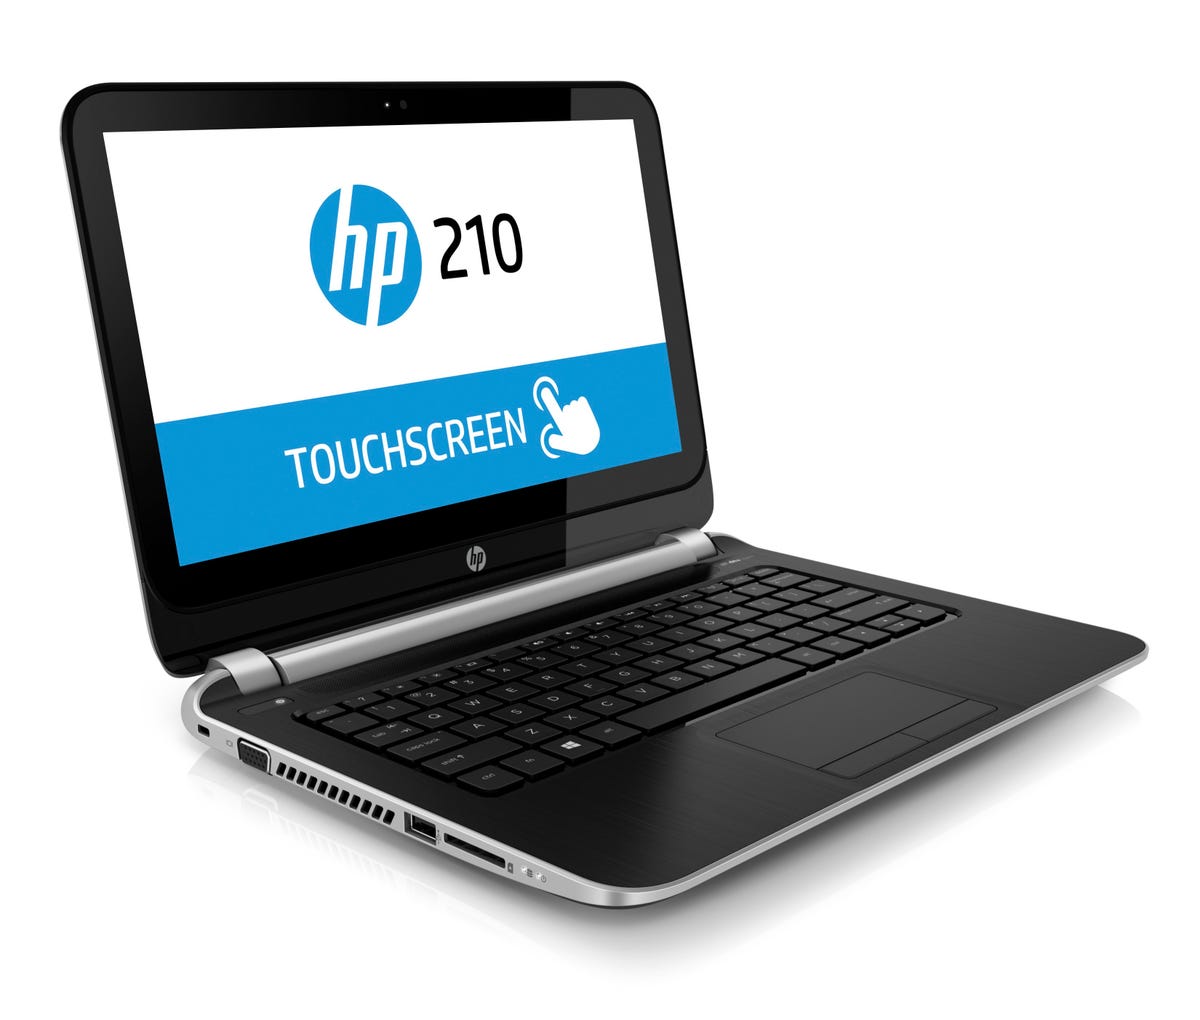 HP_210_G1_Notebook_PC_rightsmall.jpg